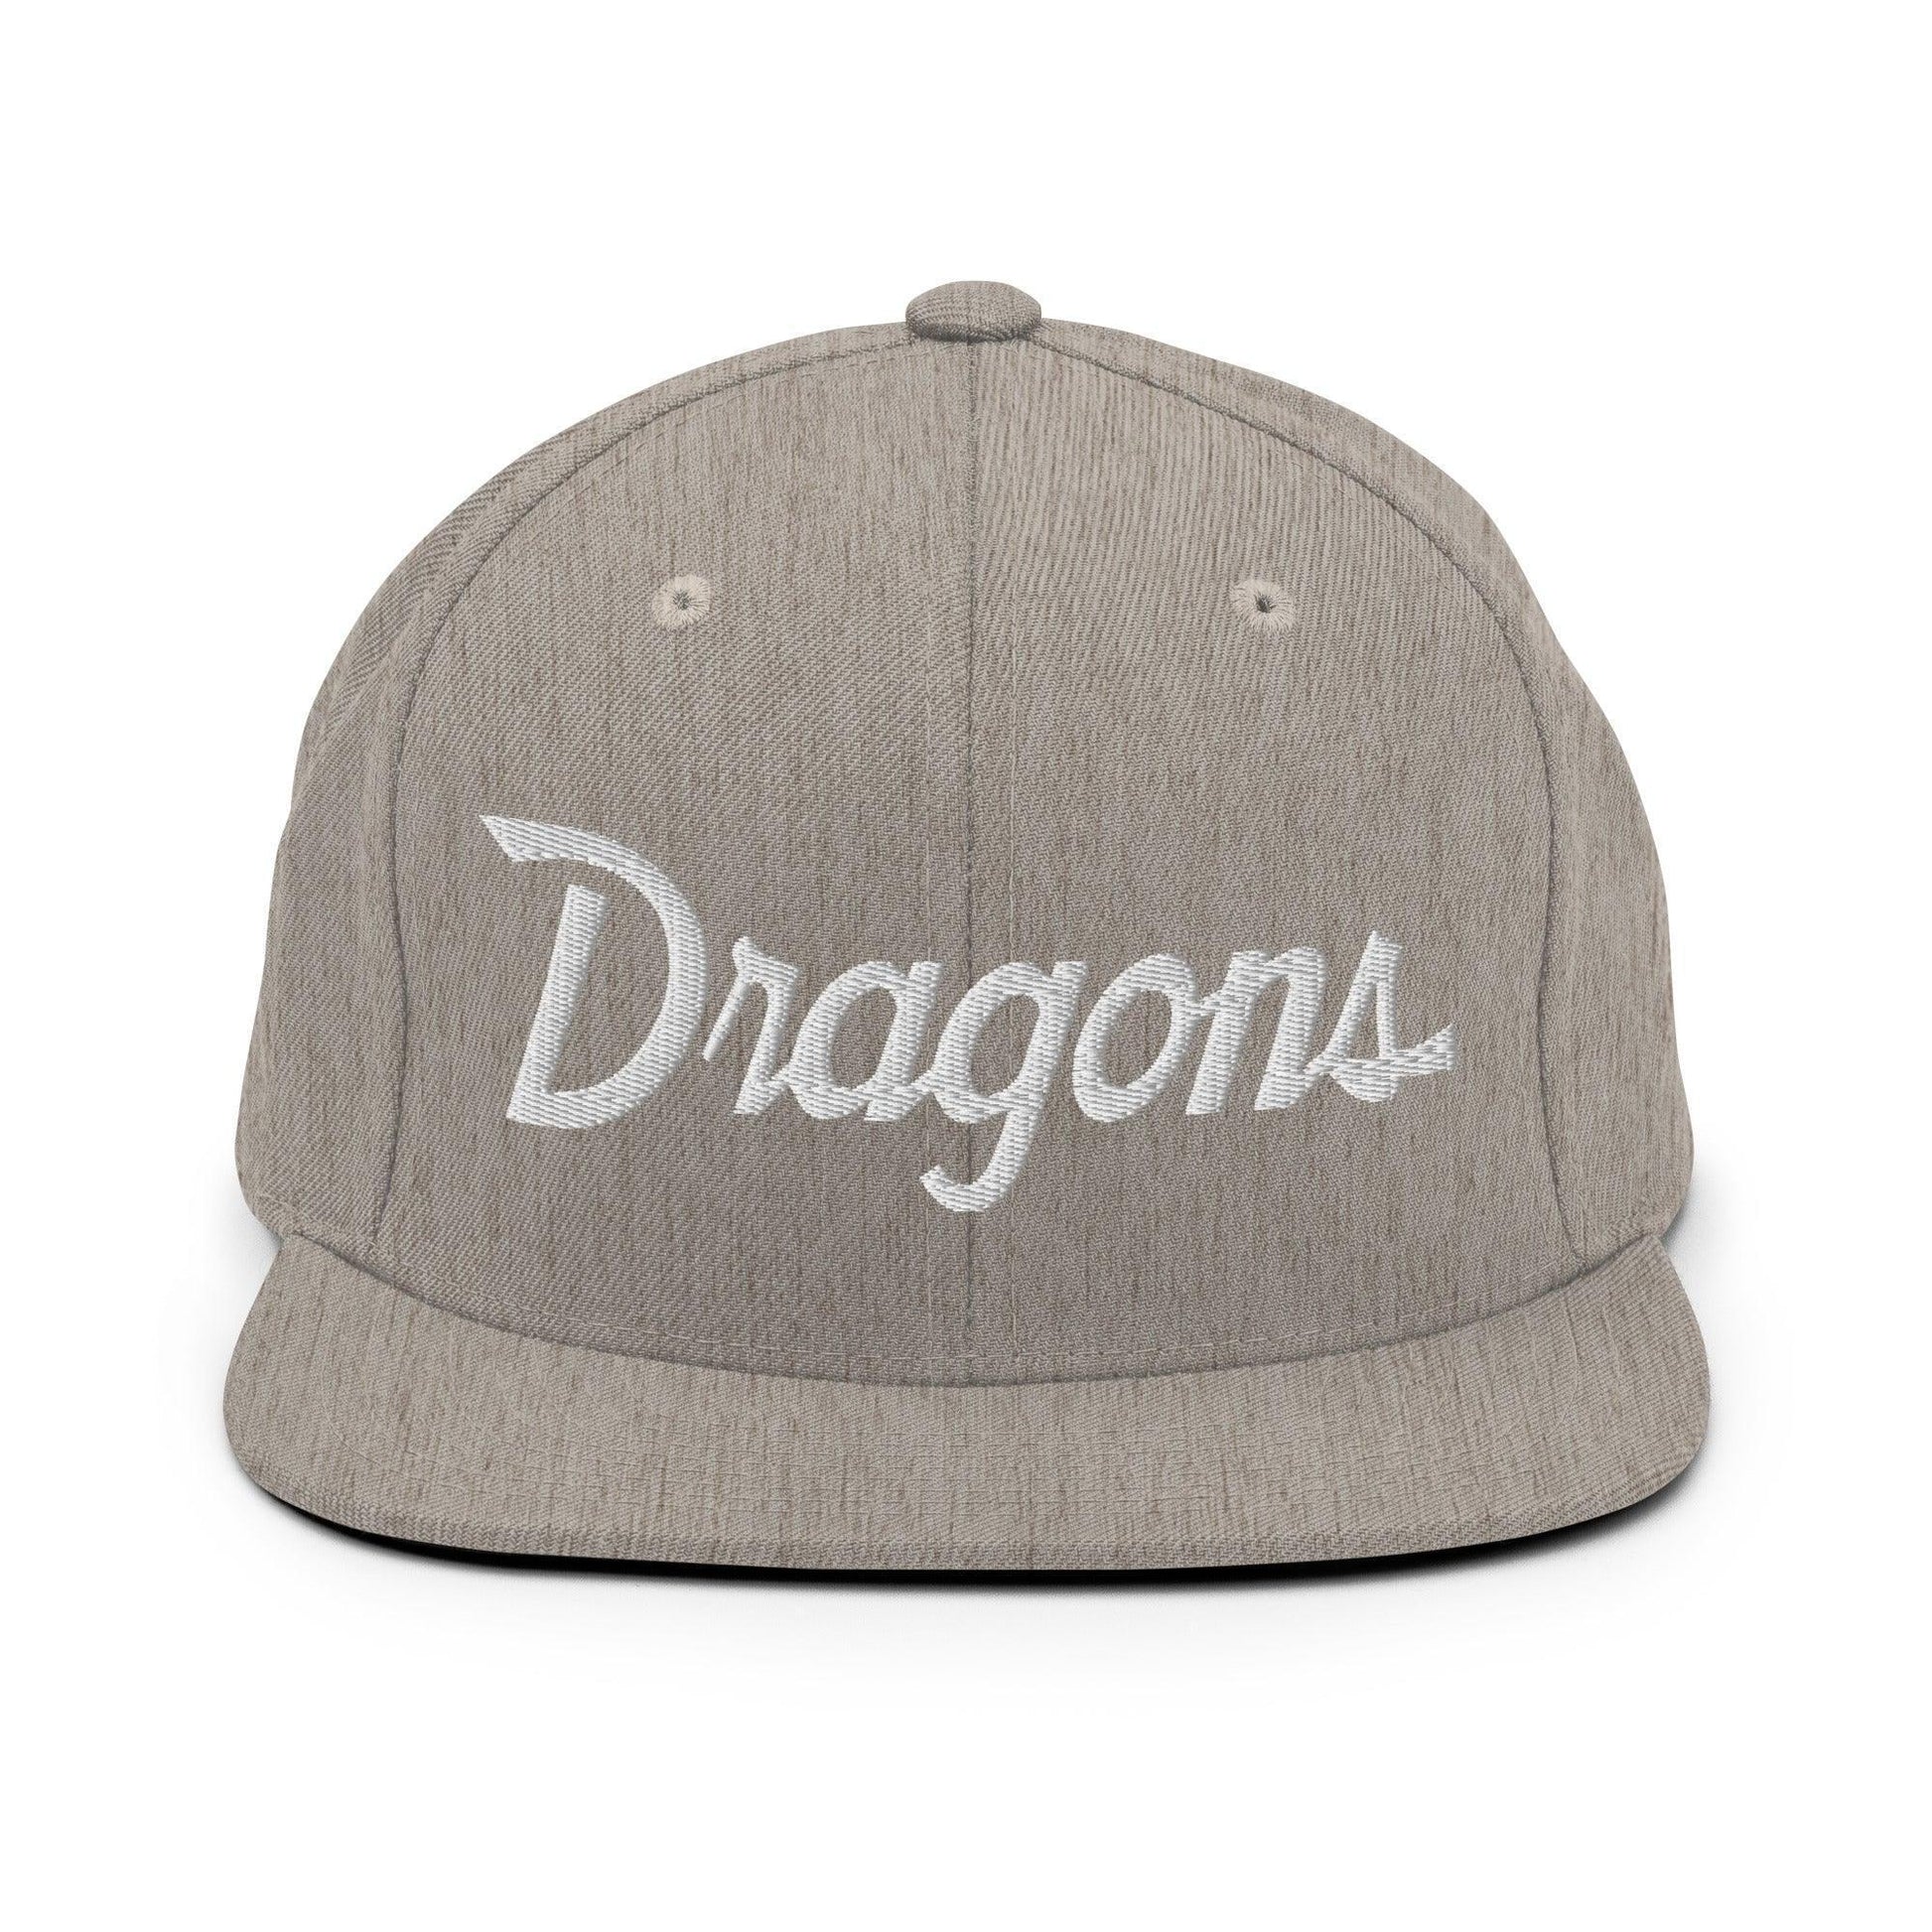 Dragons School Mascot Snapback Hat Heather Grey